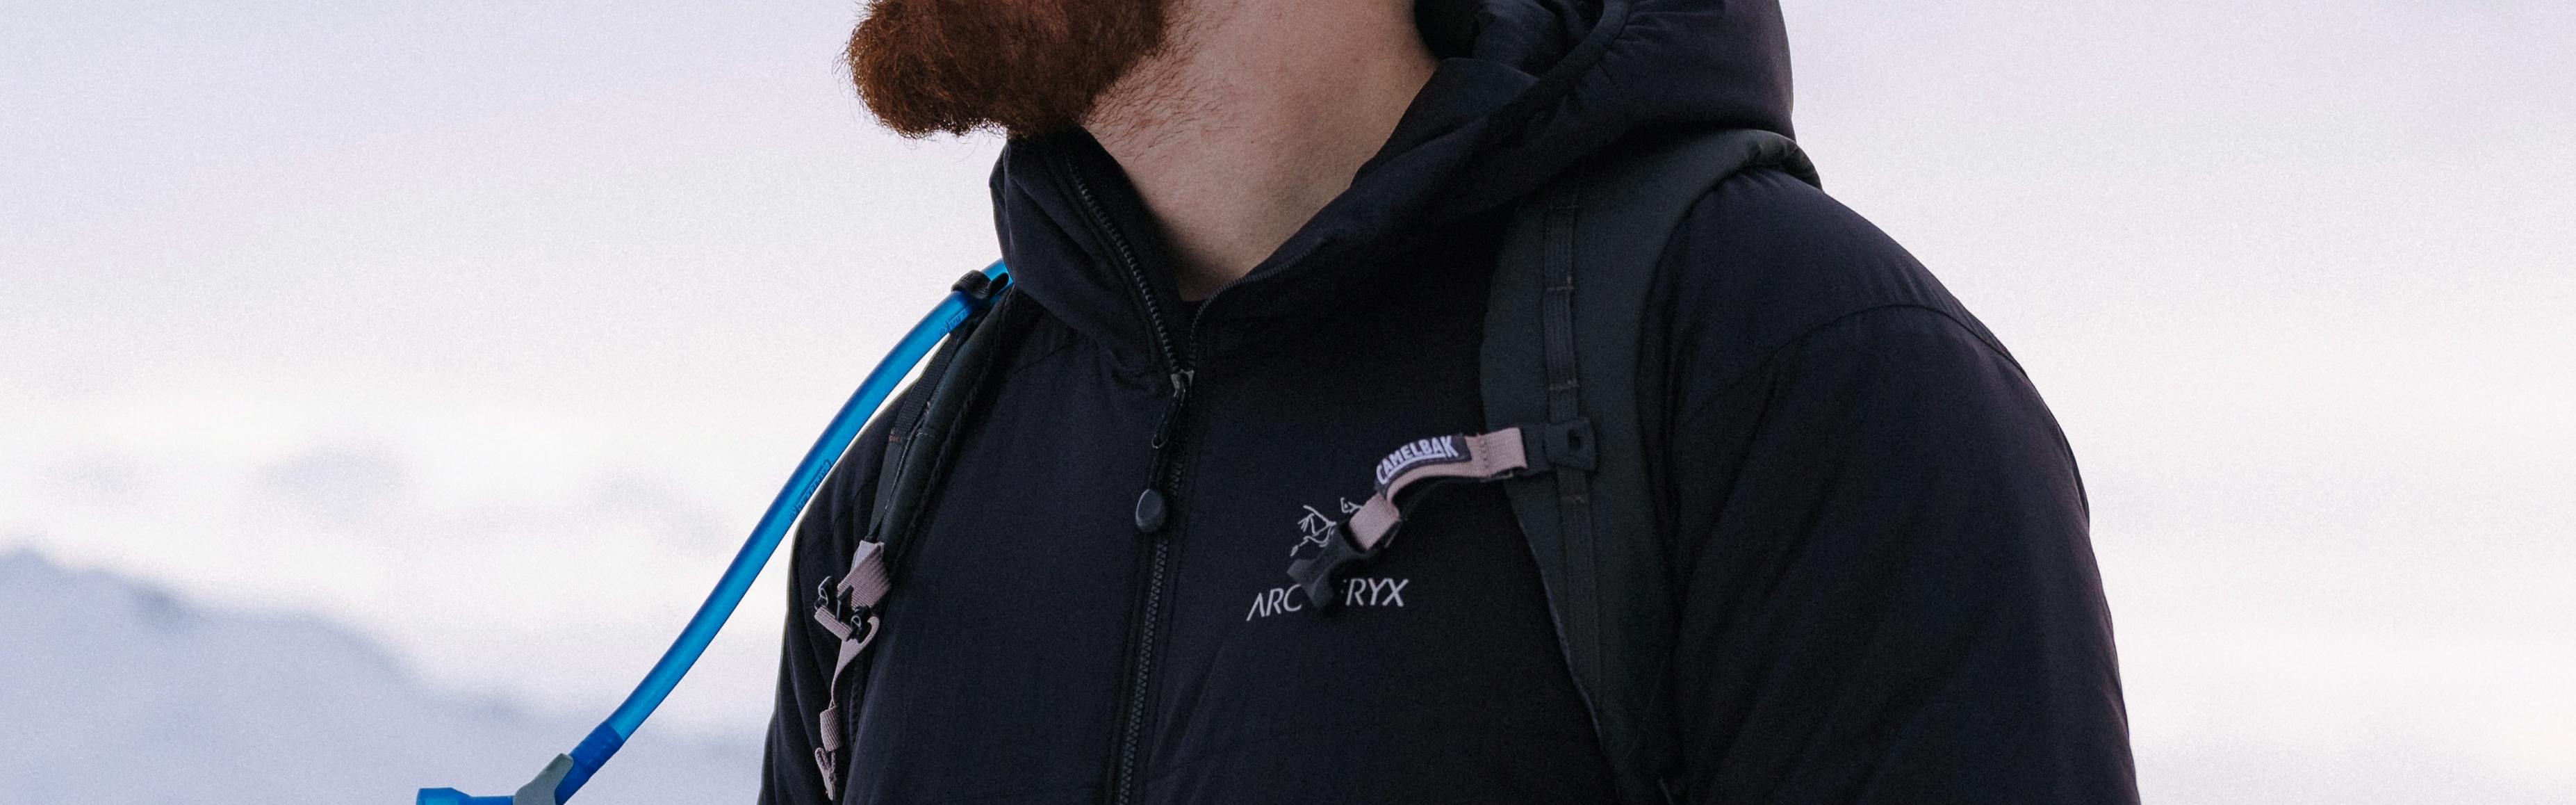 Arc'teryx Product Advice, Jacket & Gear Buyer's Guide